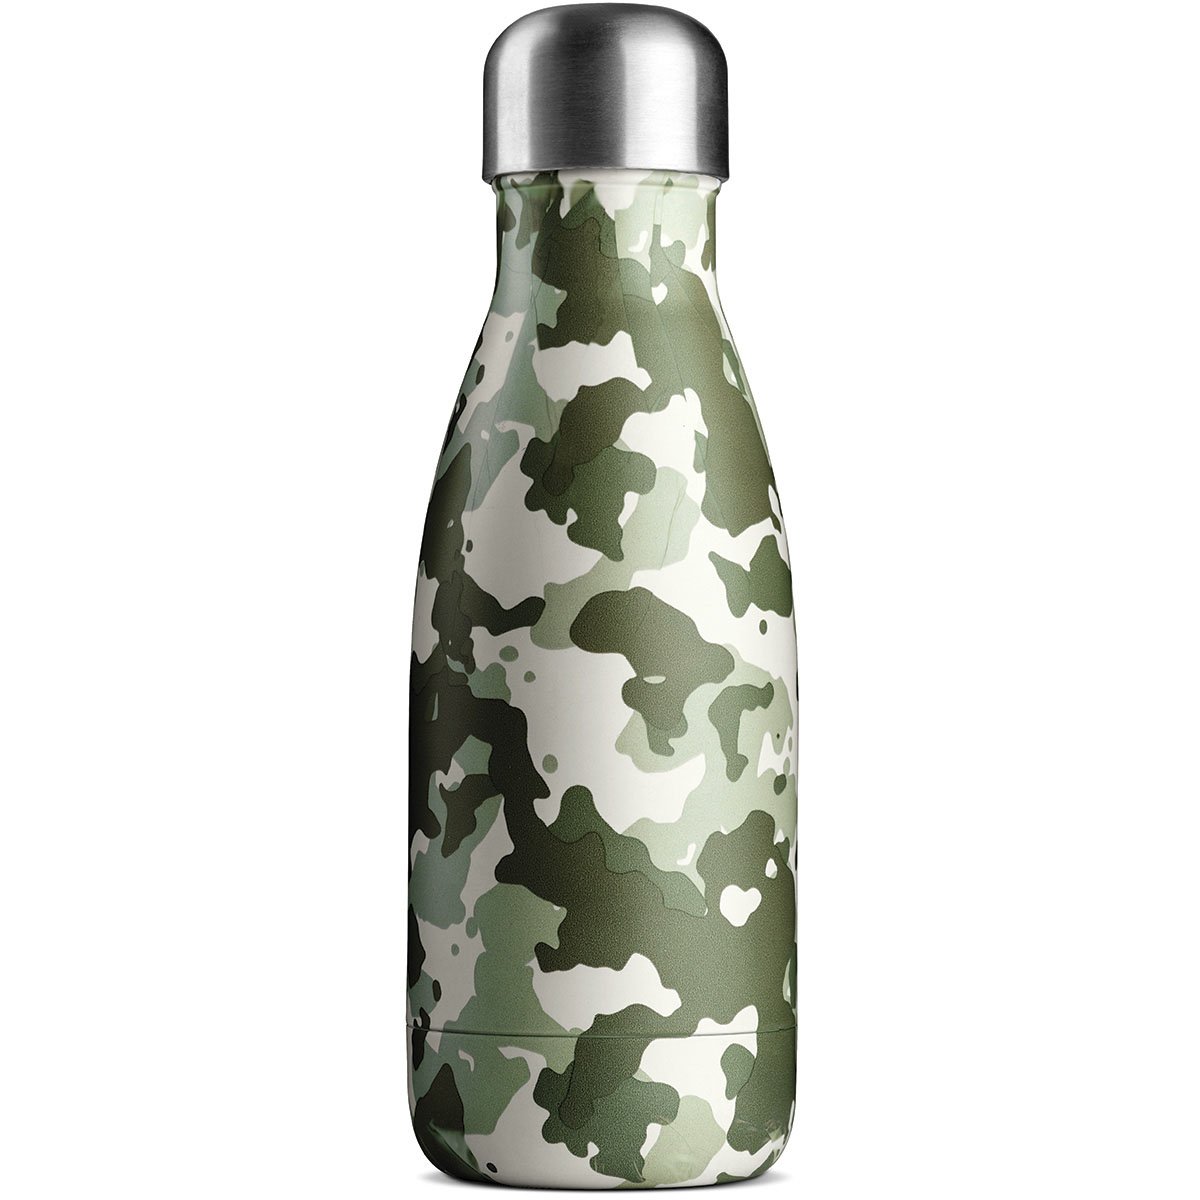 JobOut 280ml vandflaske camouflage